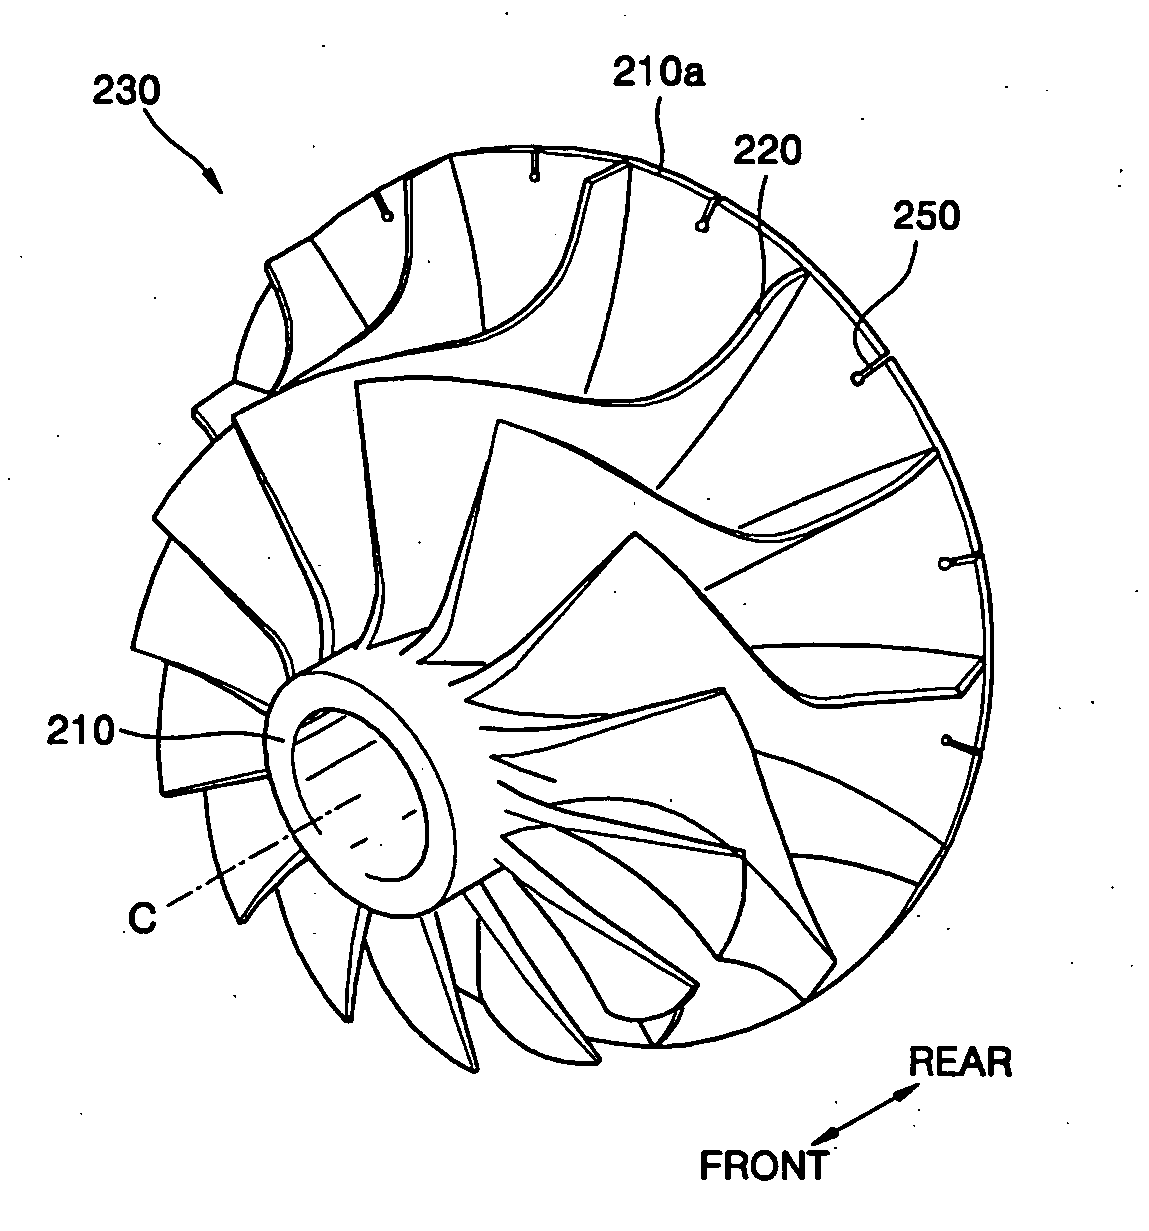 Radial-flow turbine wheel